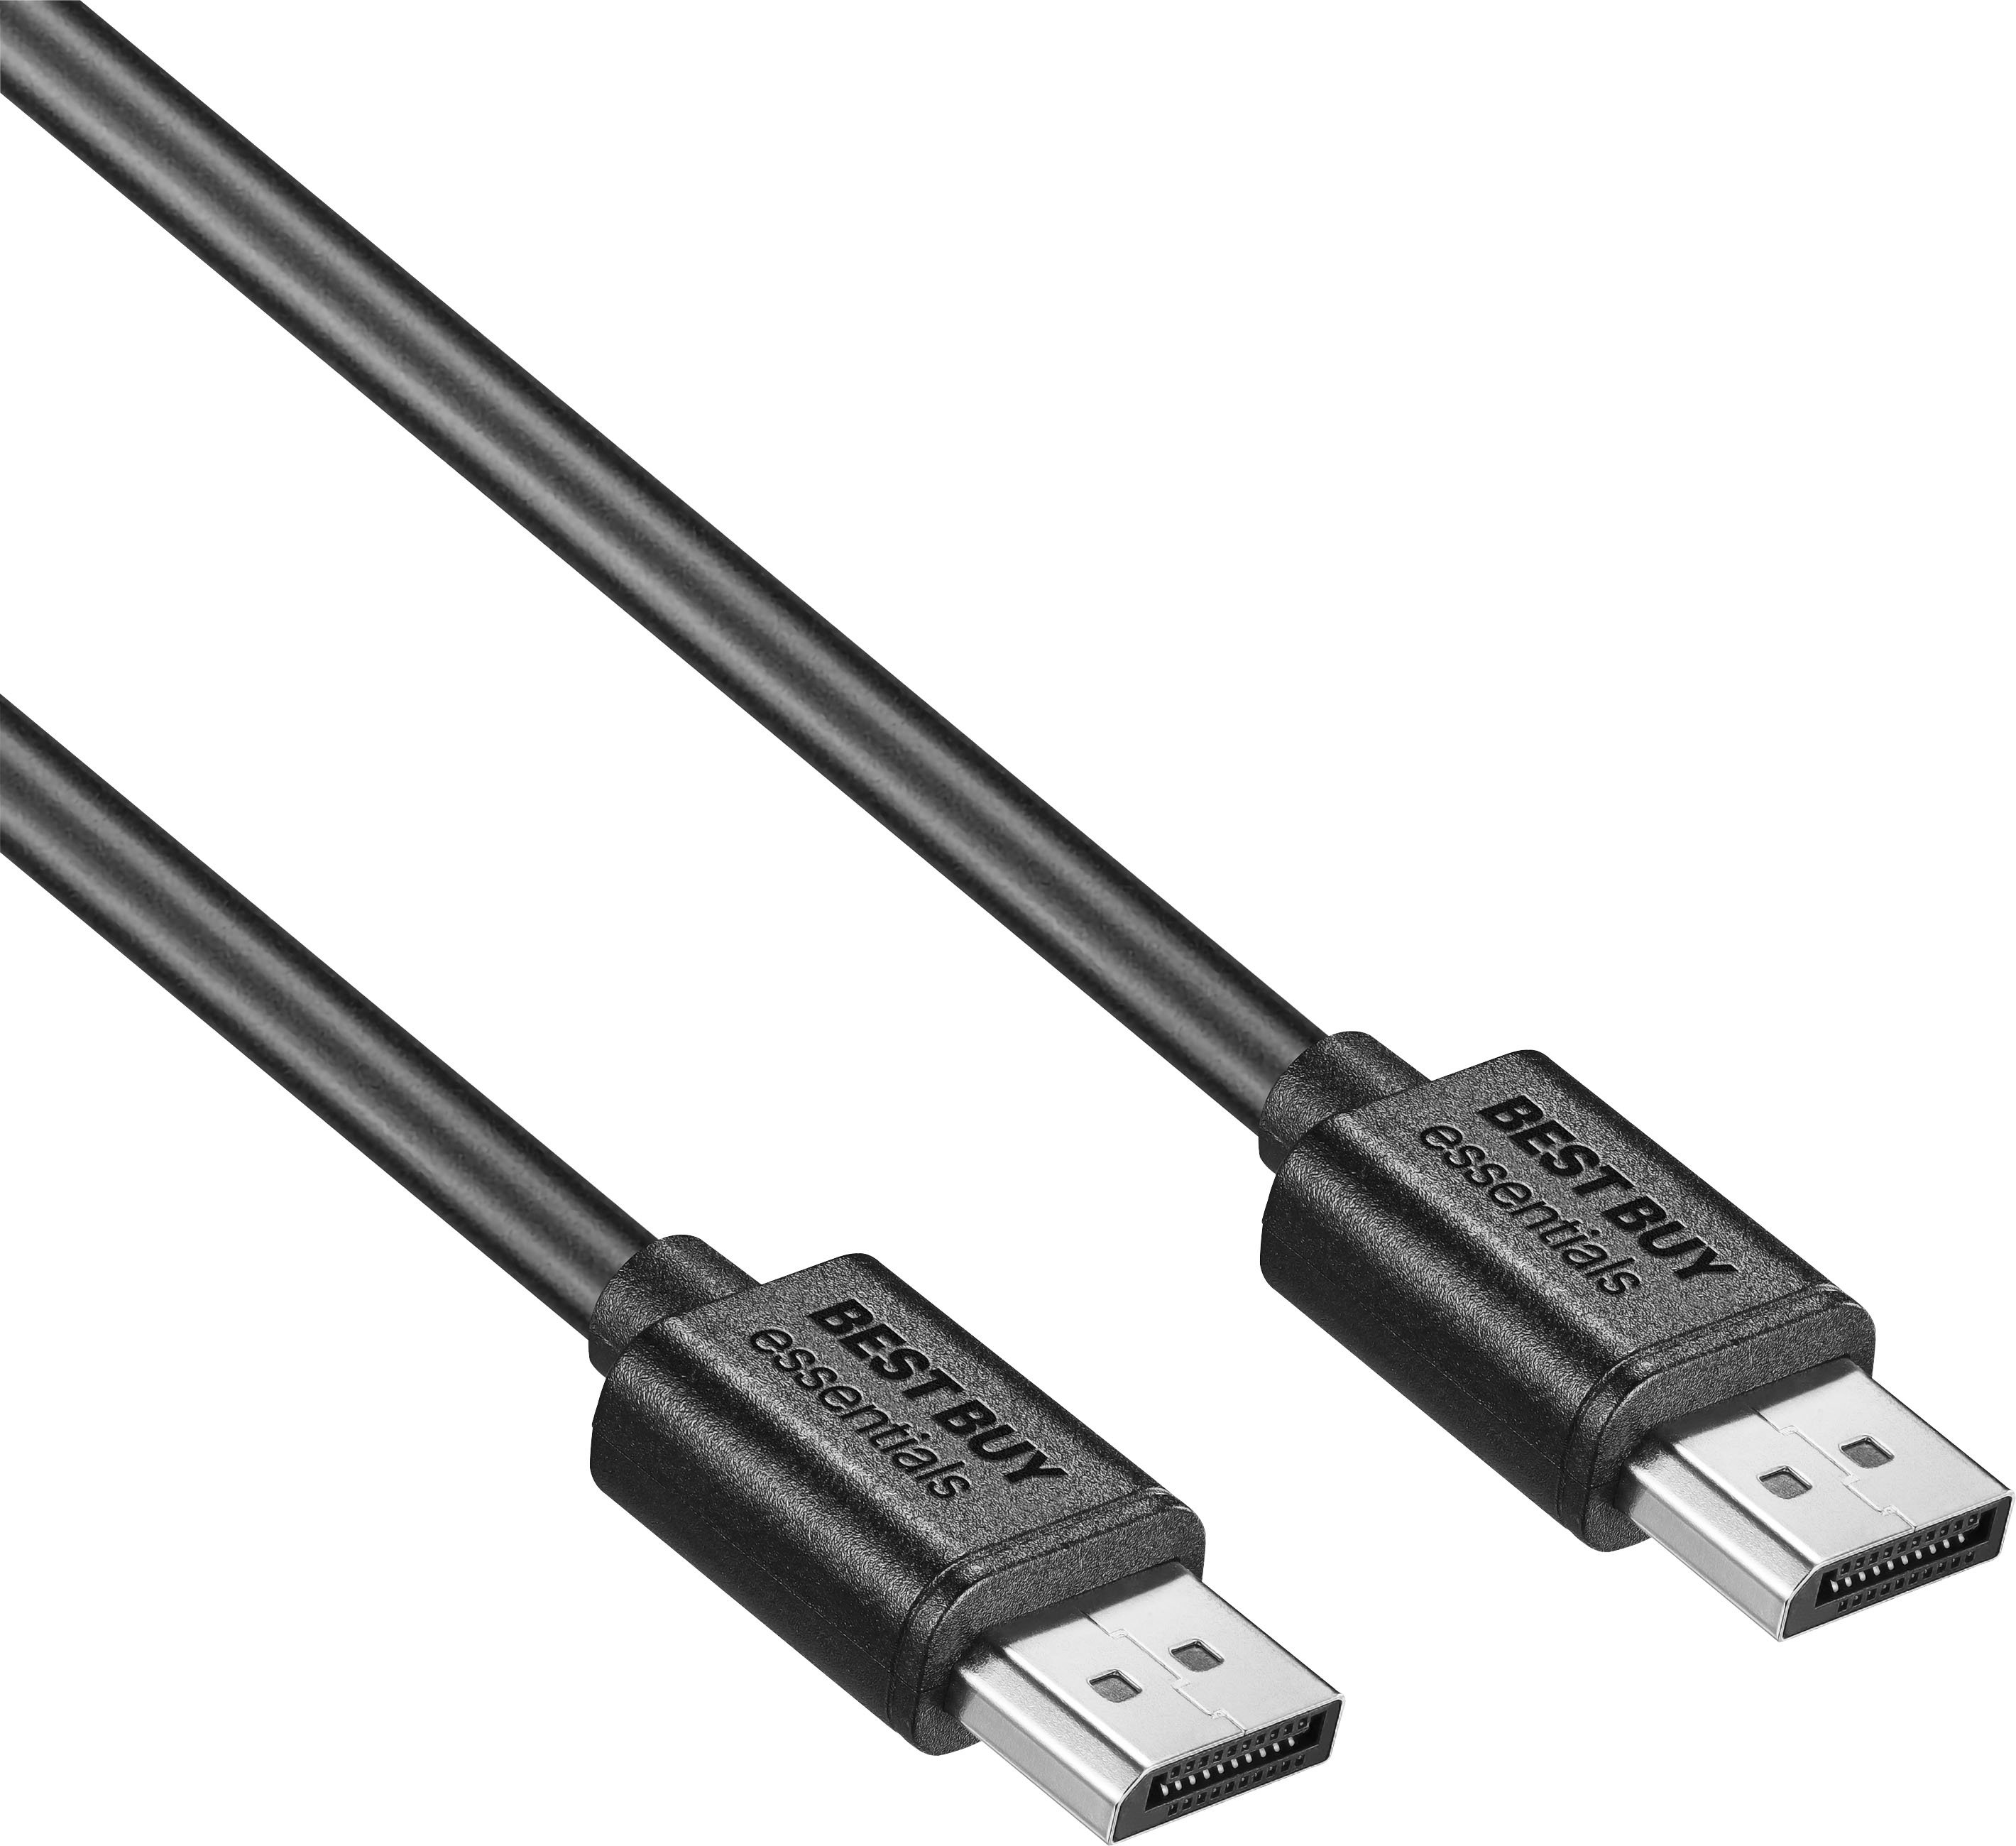 Best Buy essentials™ 10' DisplayPort Cable Black BE-PCDPDP10